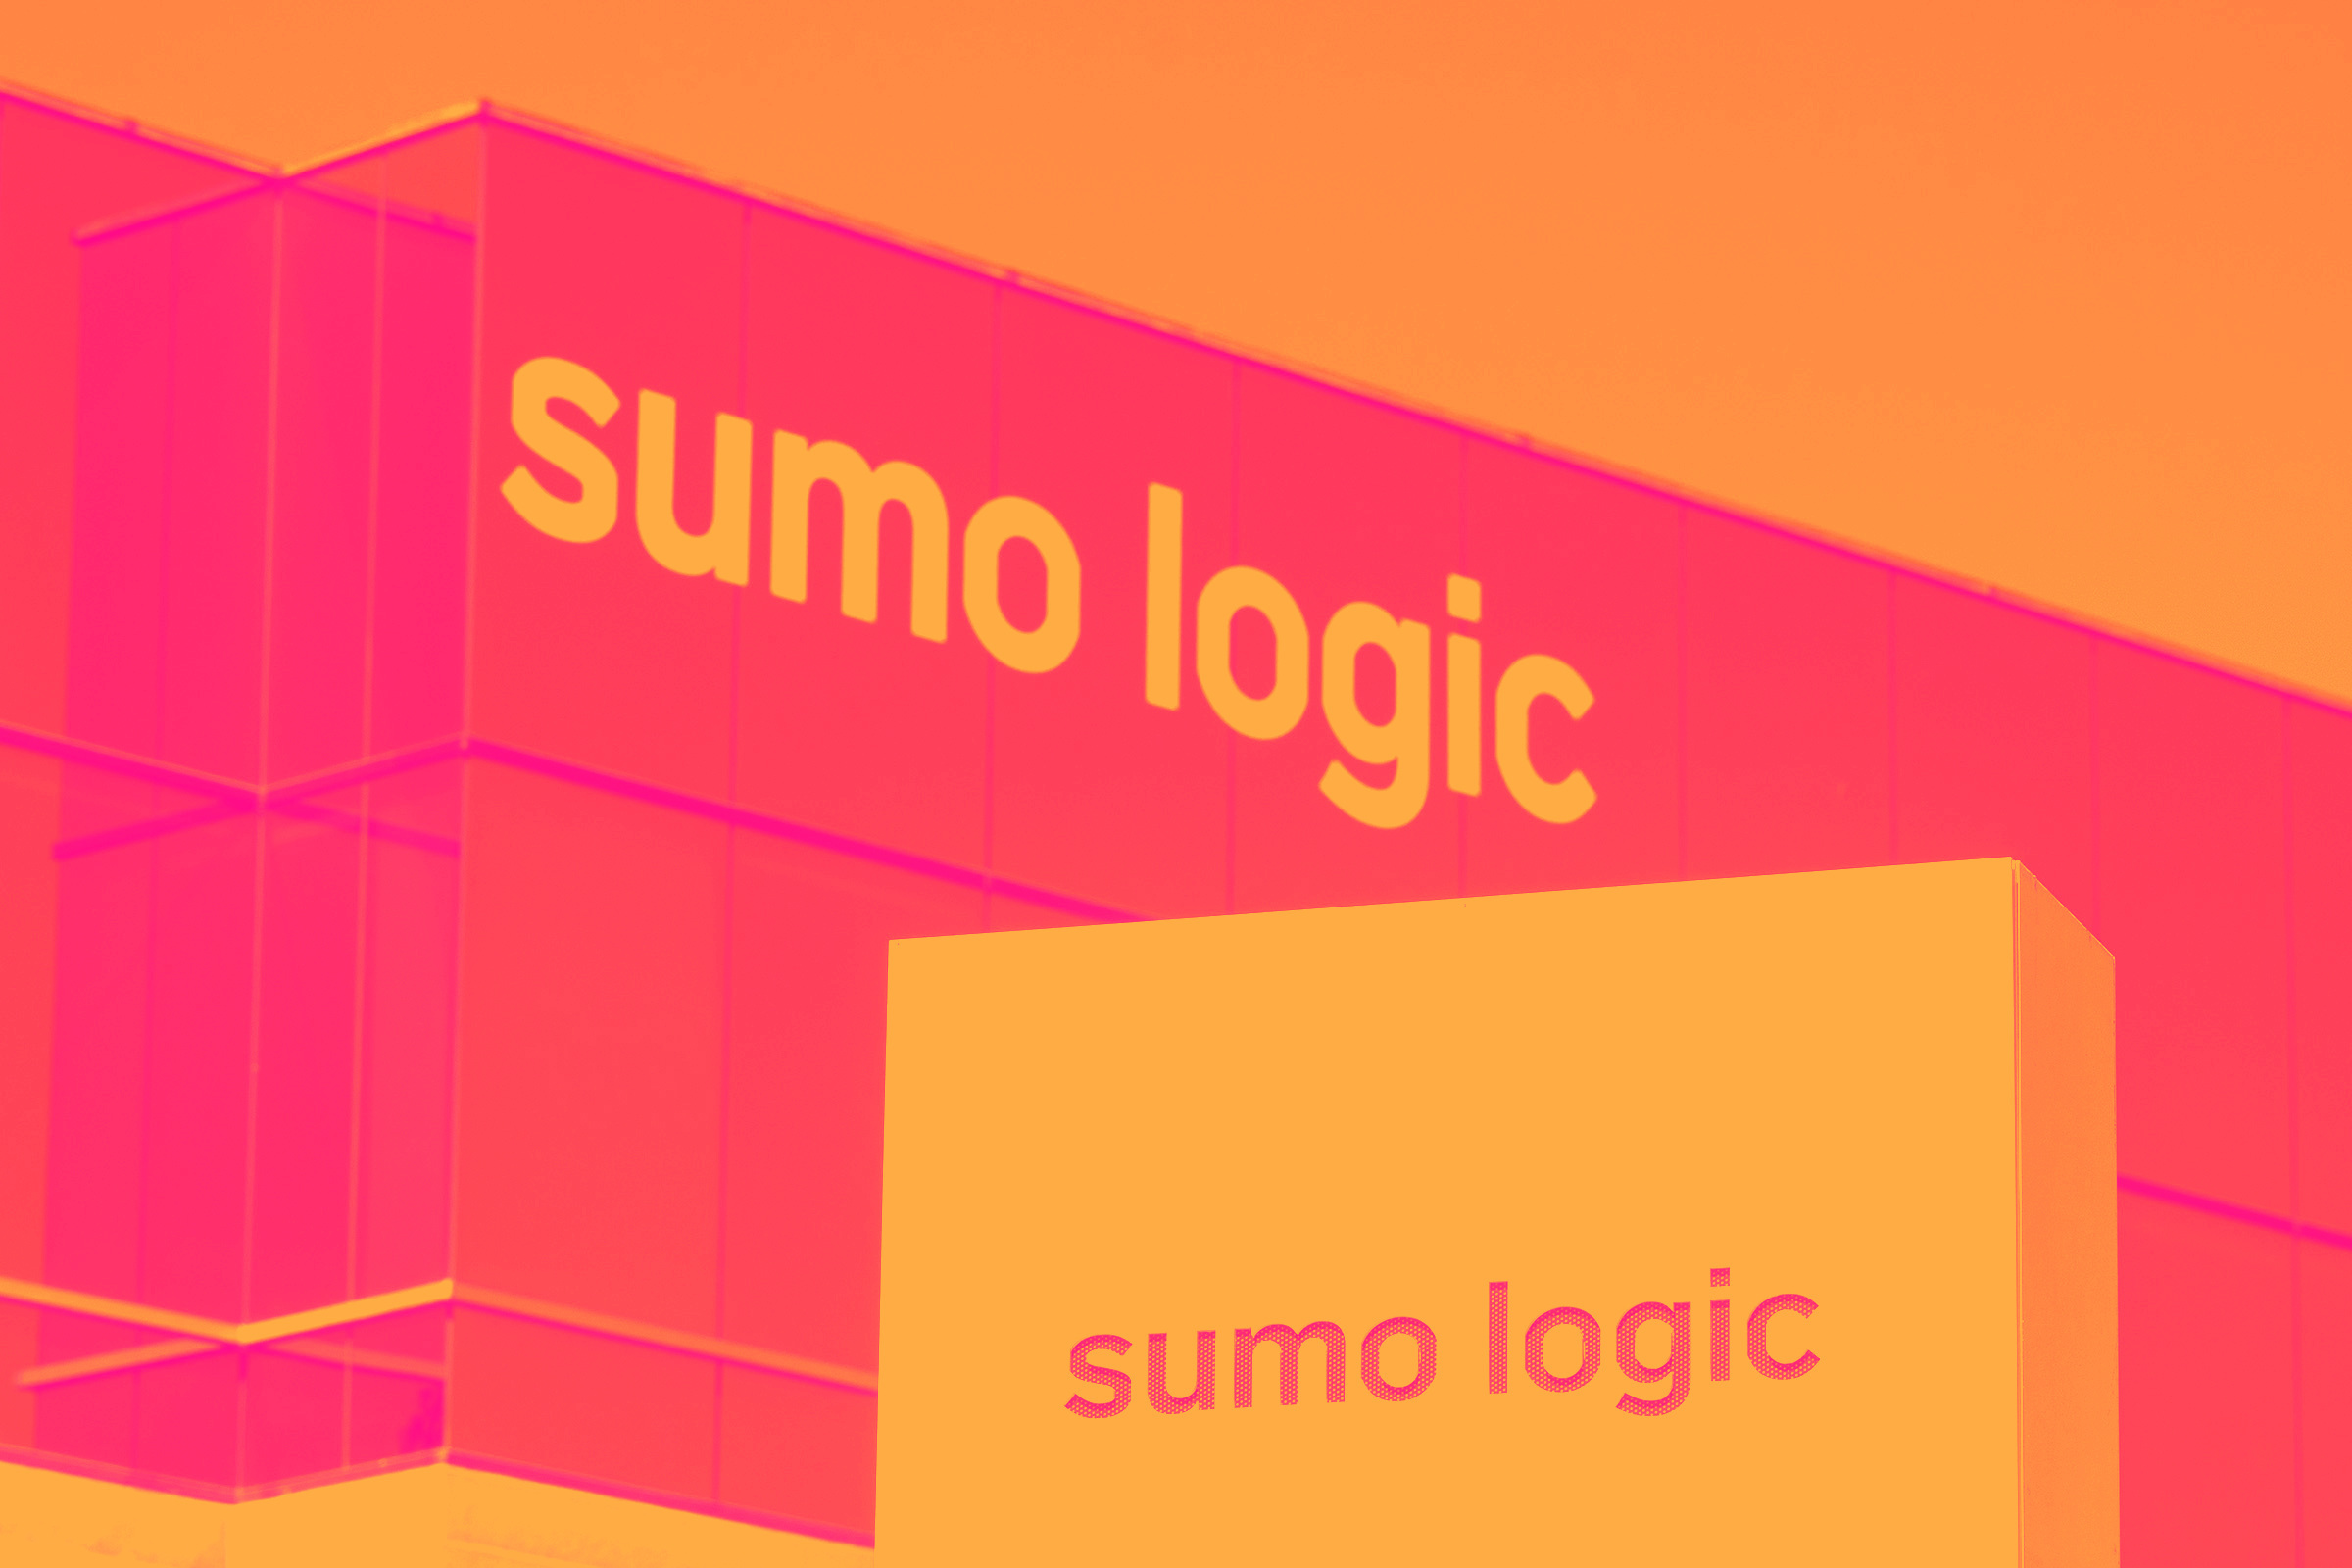 Sumo logic cover image vg S Fl YM